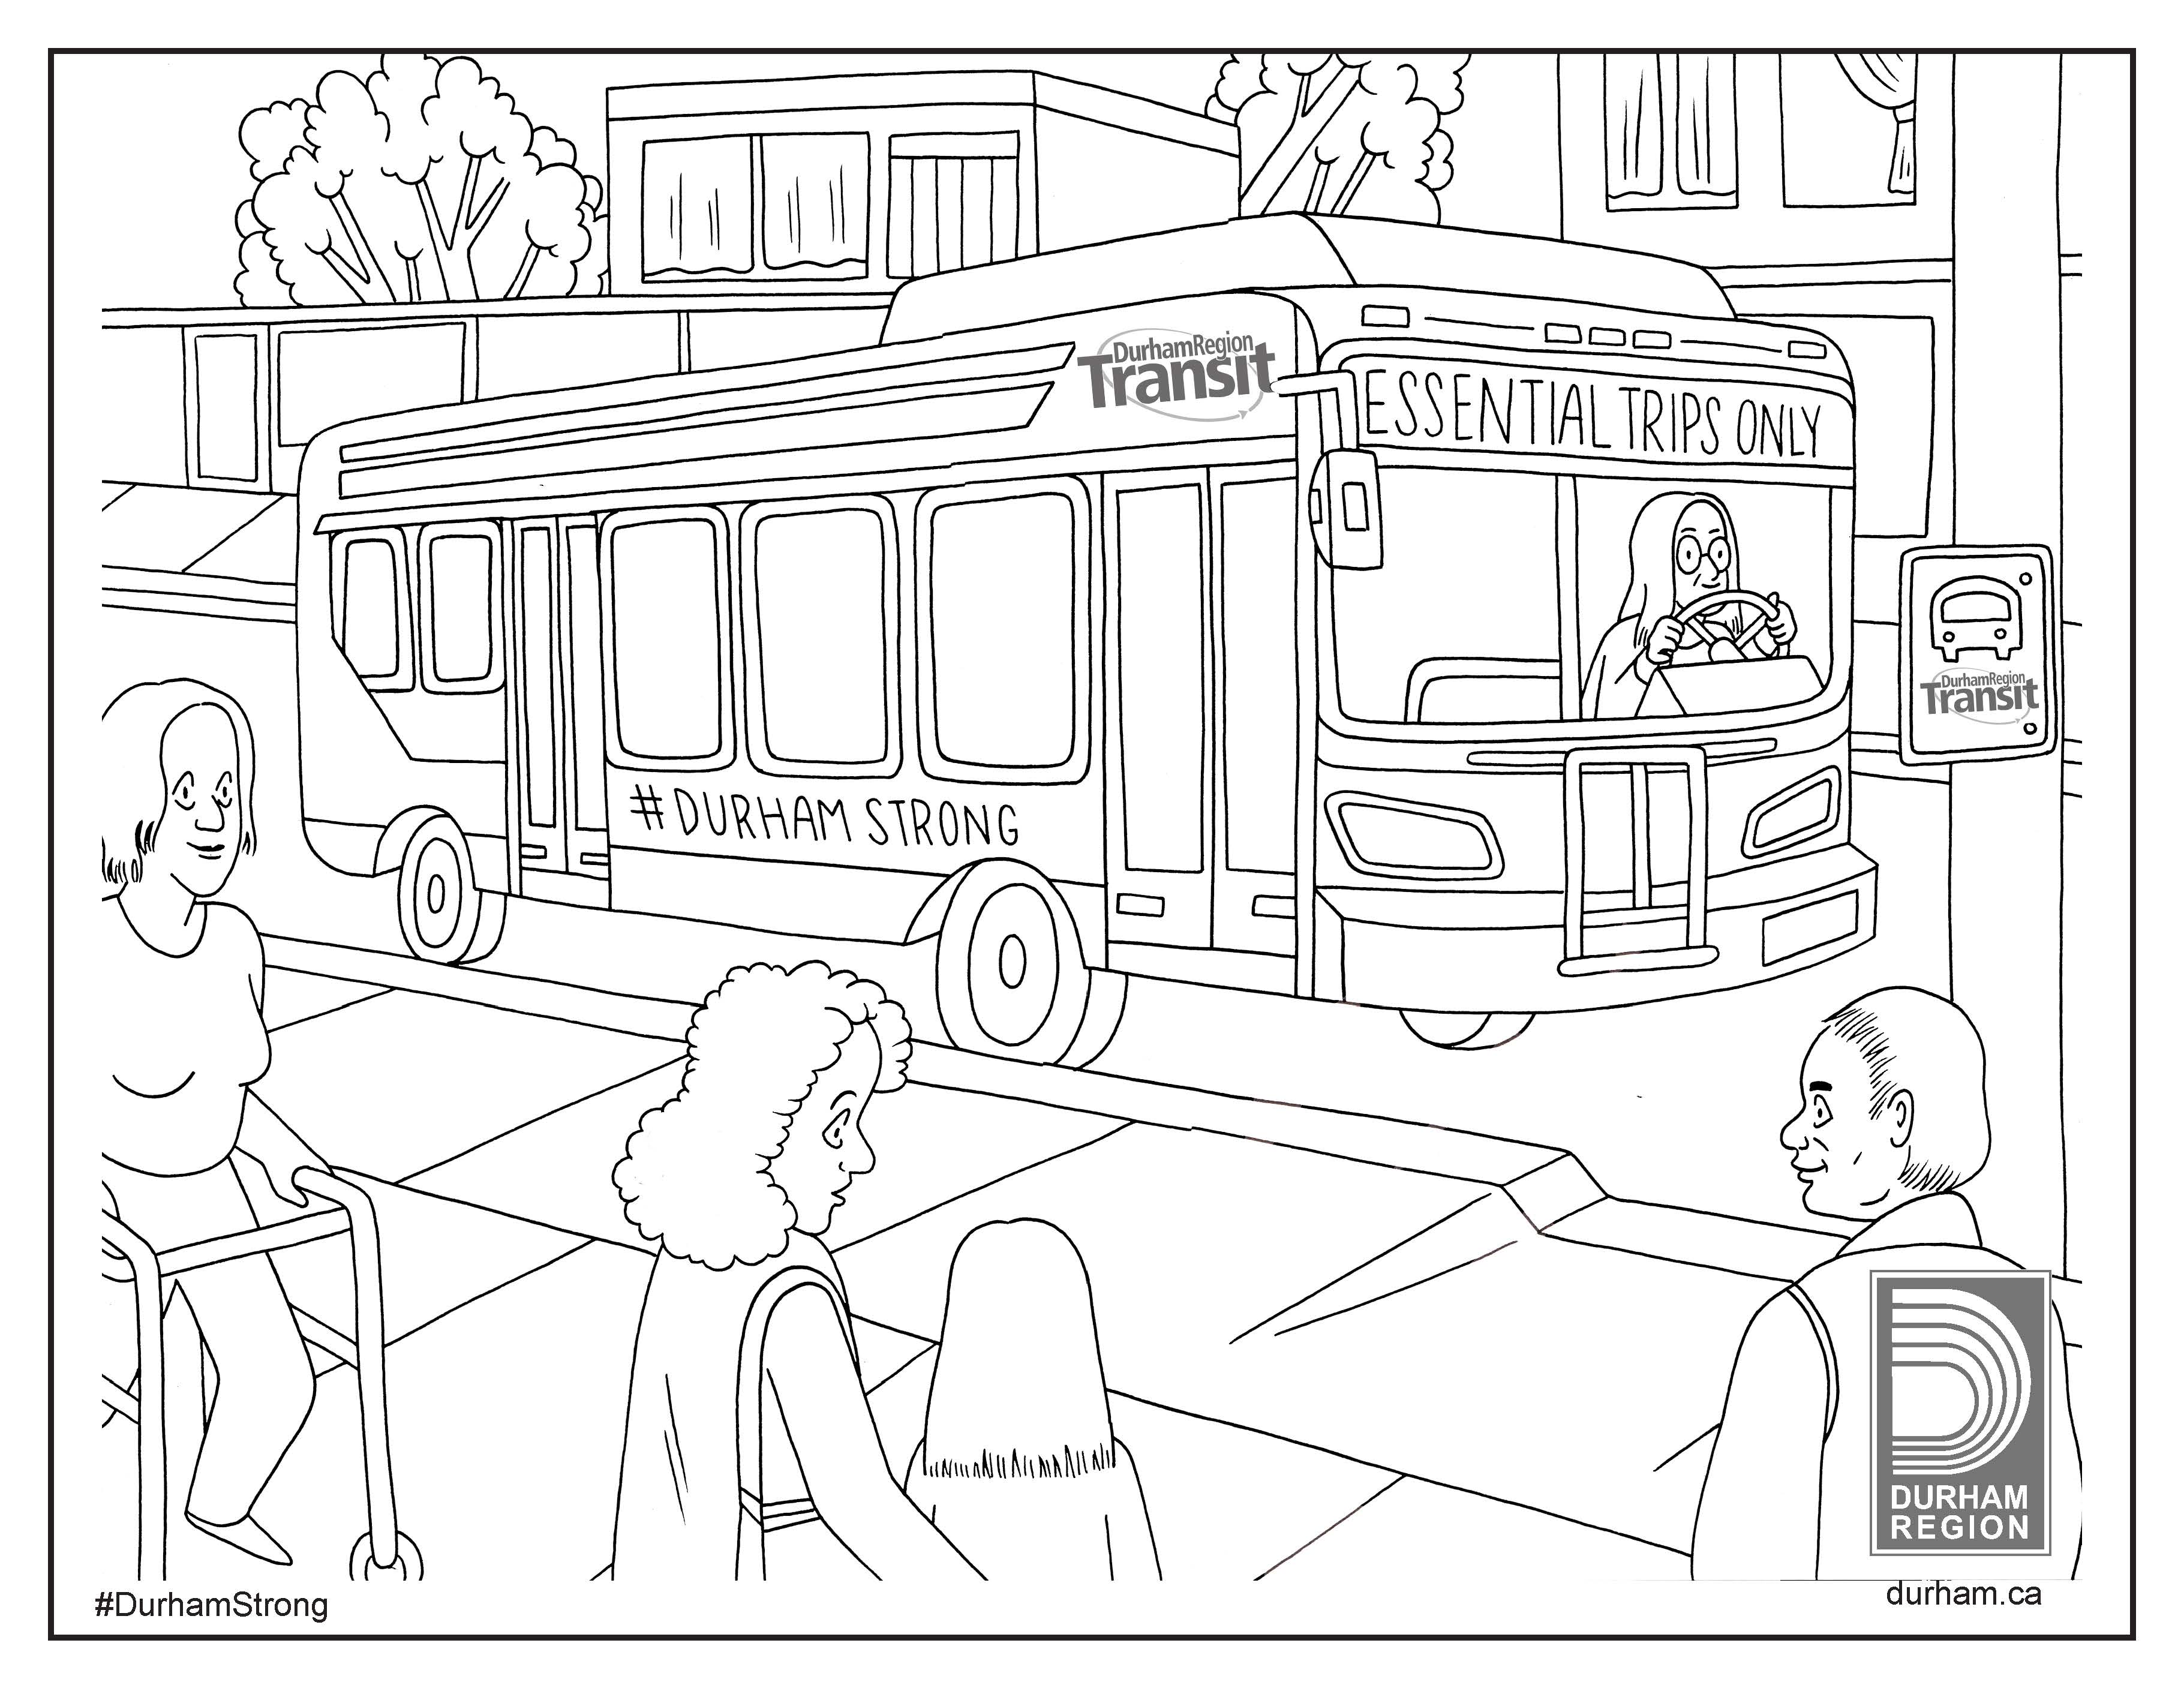 Illustration of Durham Region Transit bus